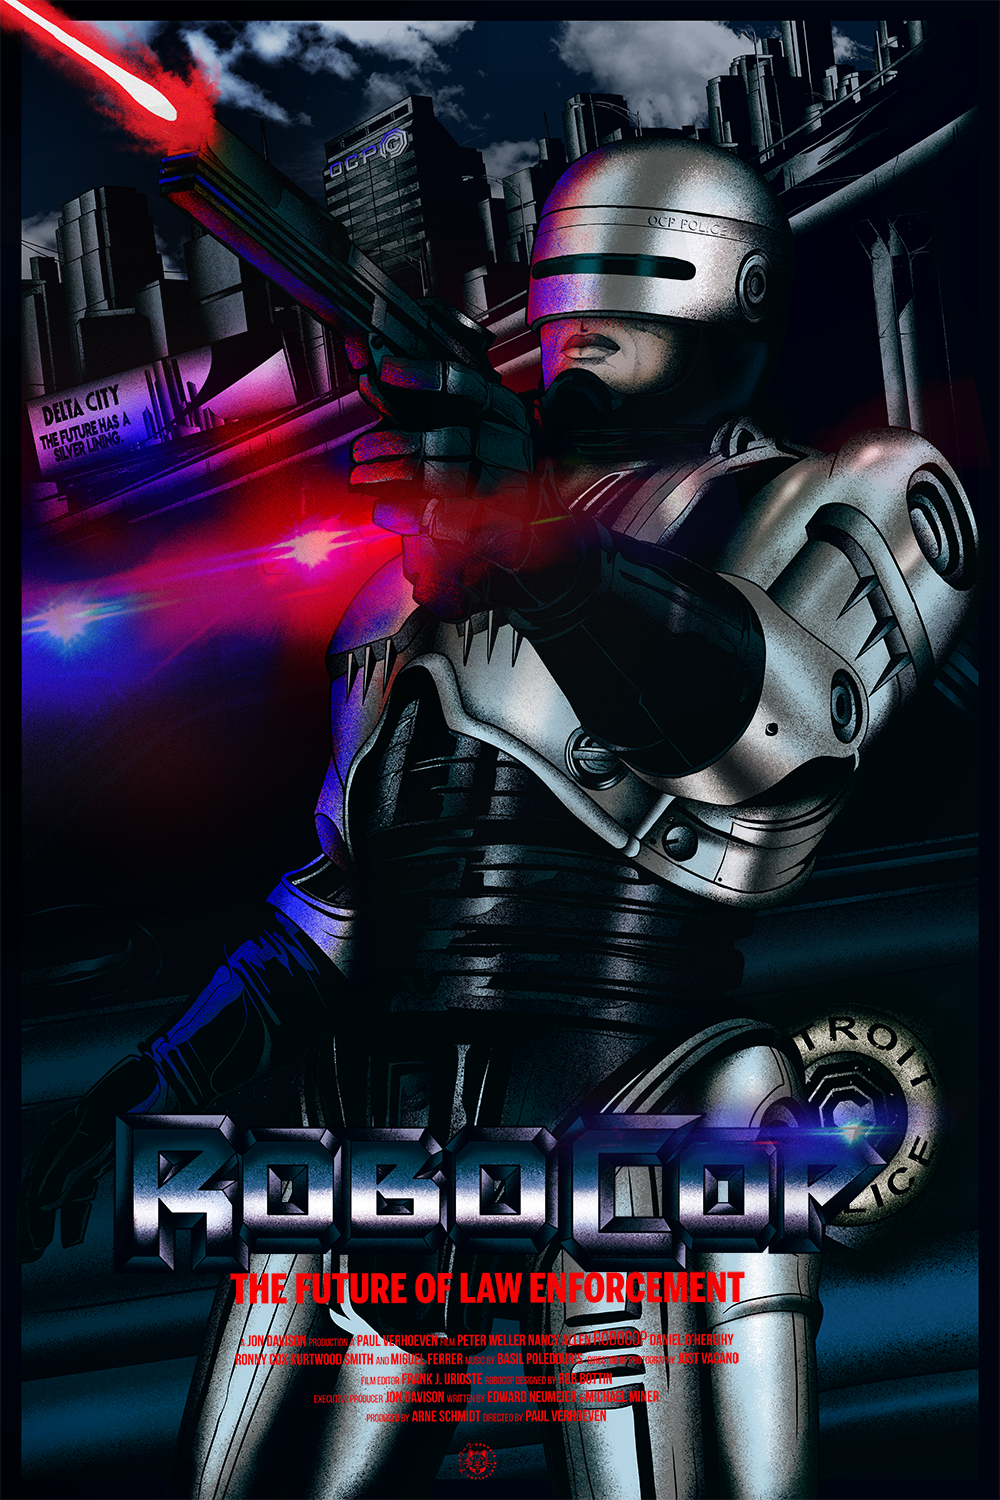 robocop 3 movie poster